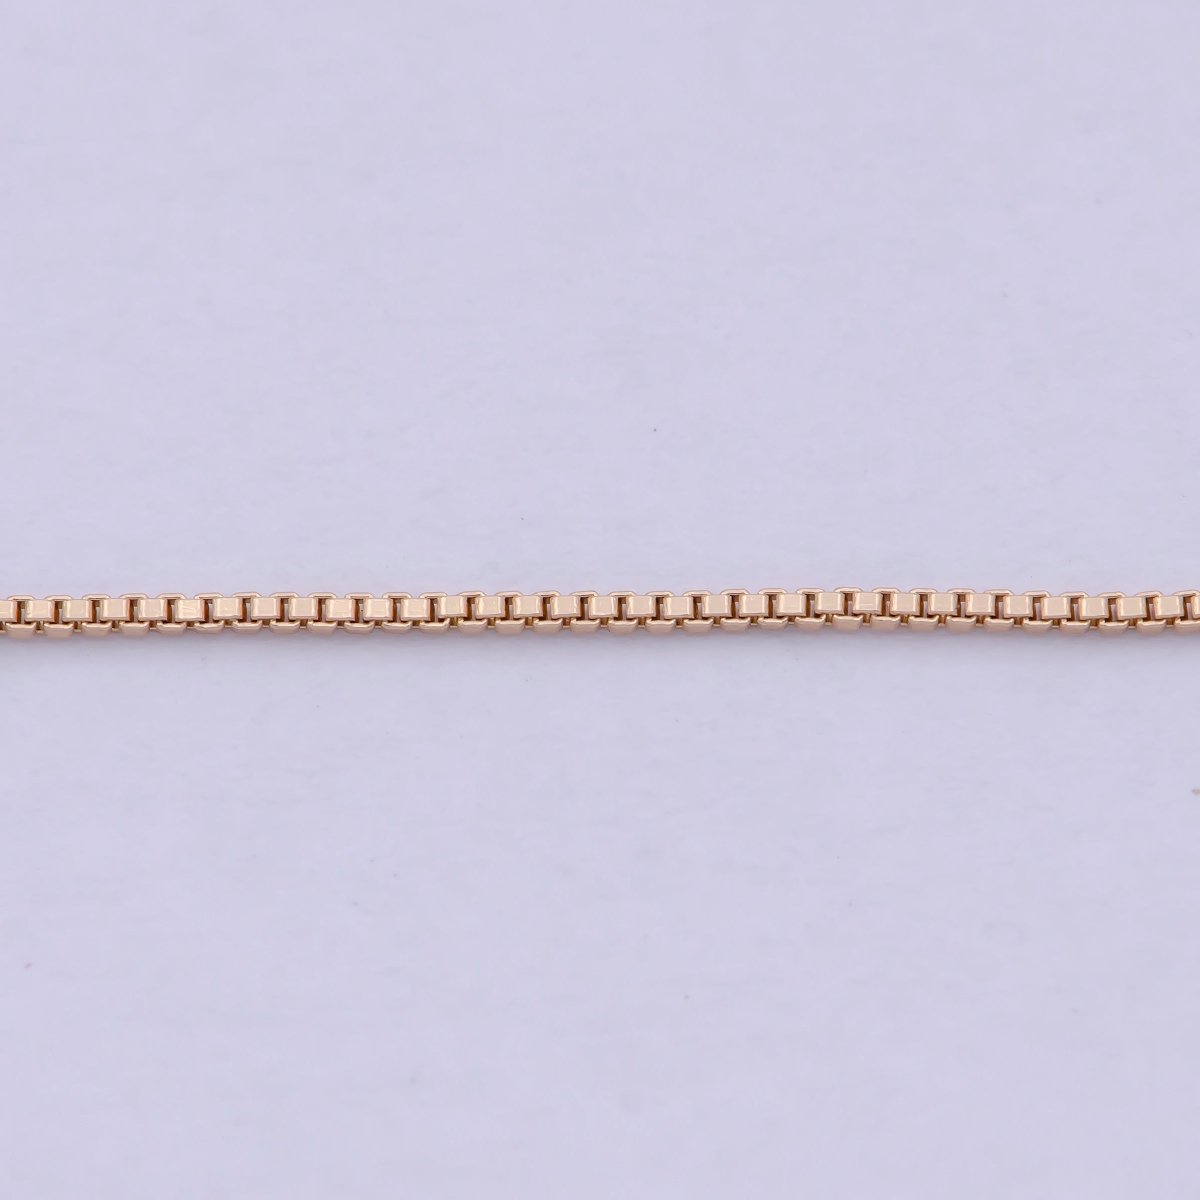 14K Gold Filled Box Chain Necklace, 16 Inch Box Chain Necklace, Dainty 0.6mm Box Necklace w/ Lobster Clasp | WA-810 WA-822 - DLUXCA